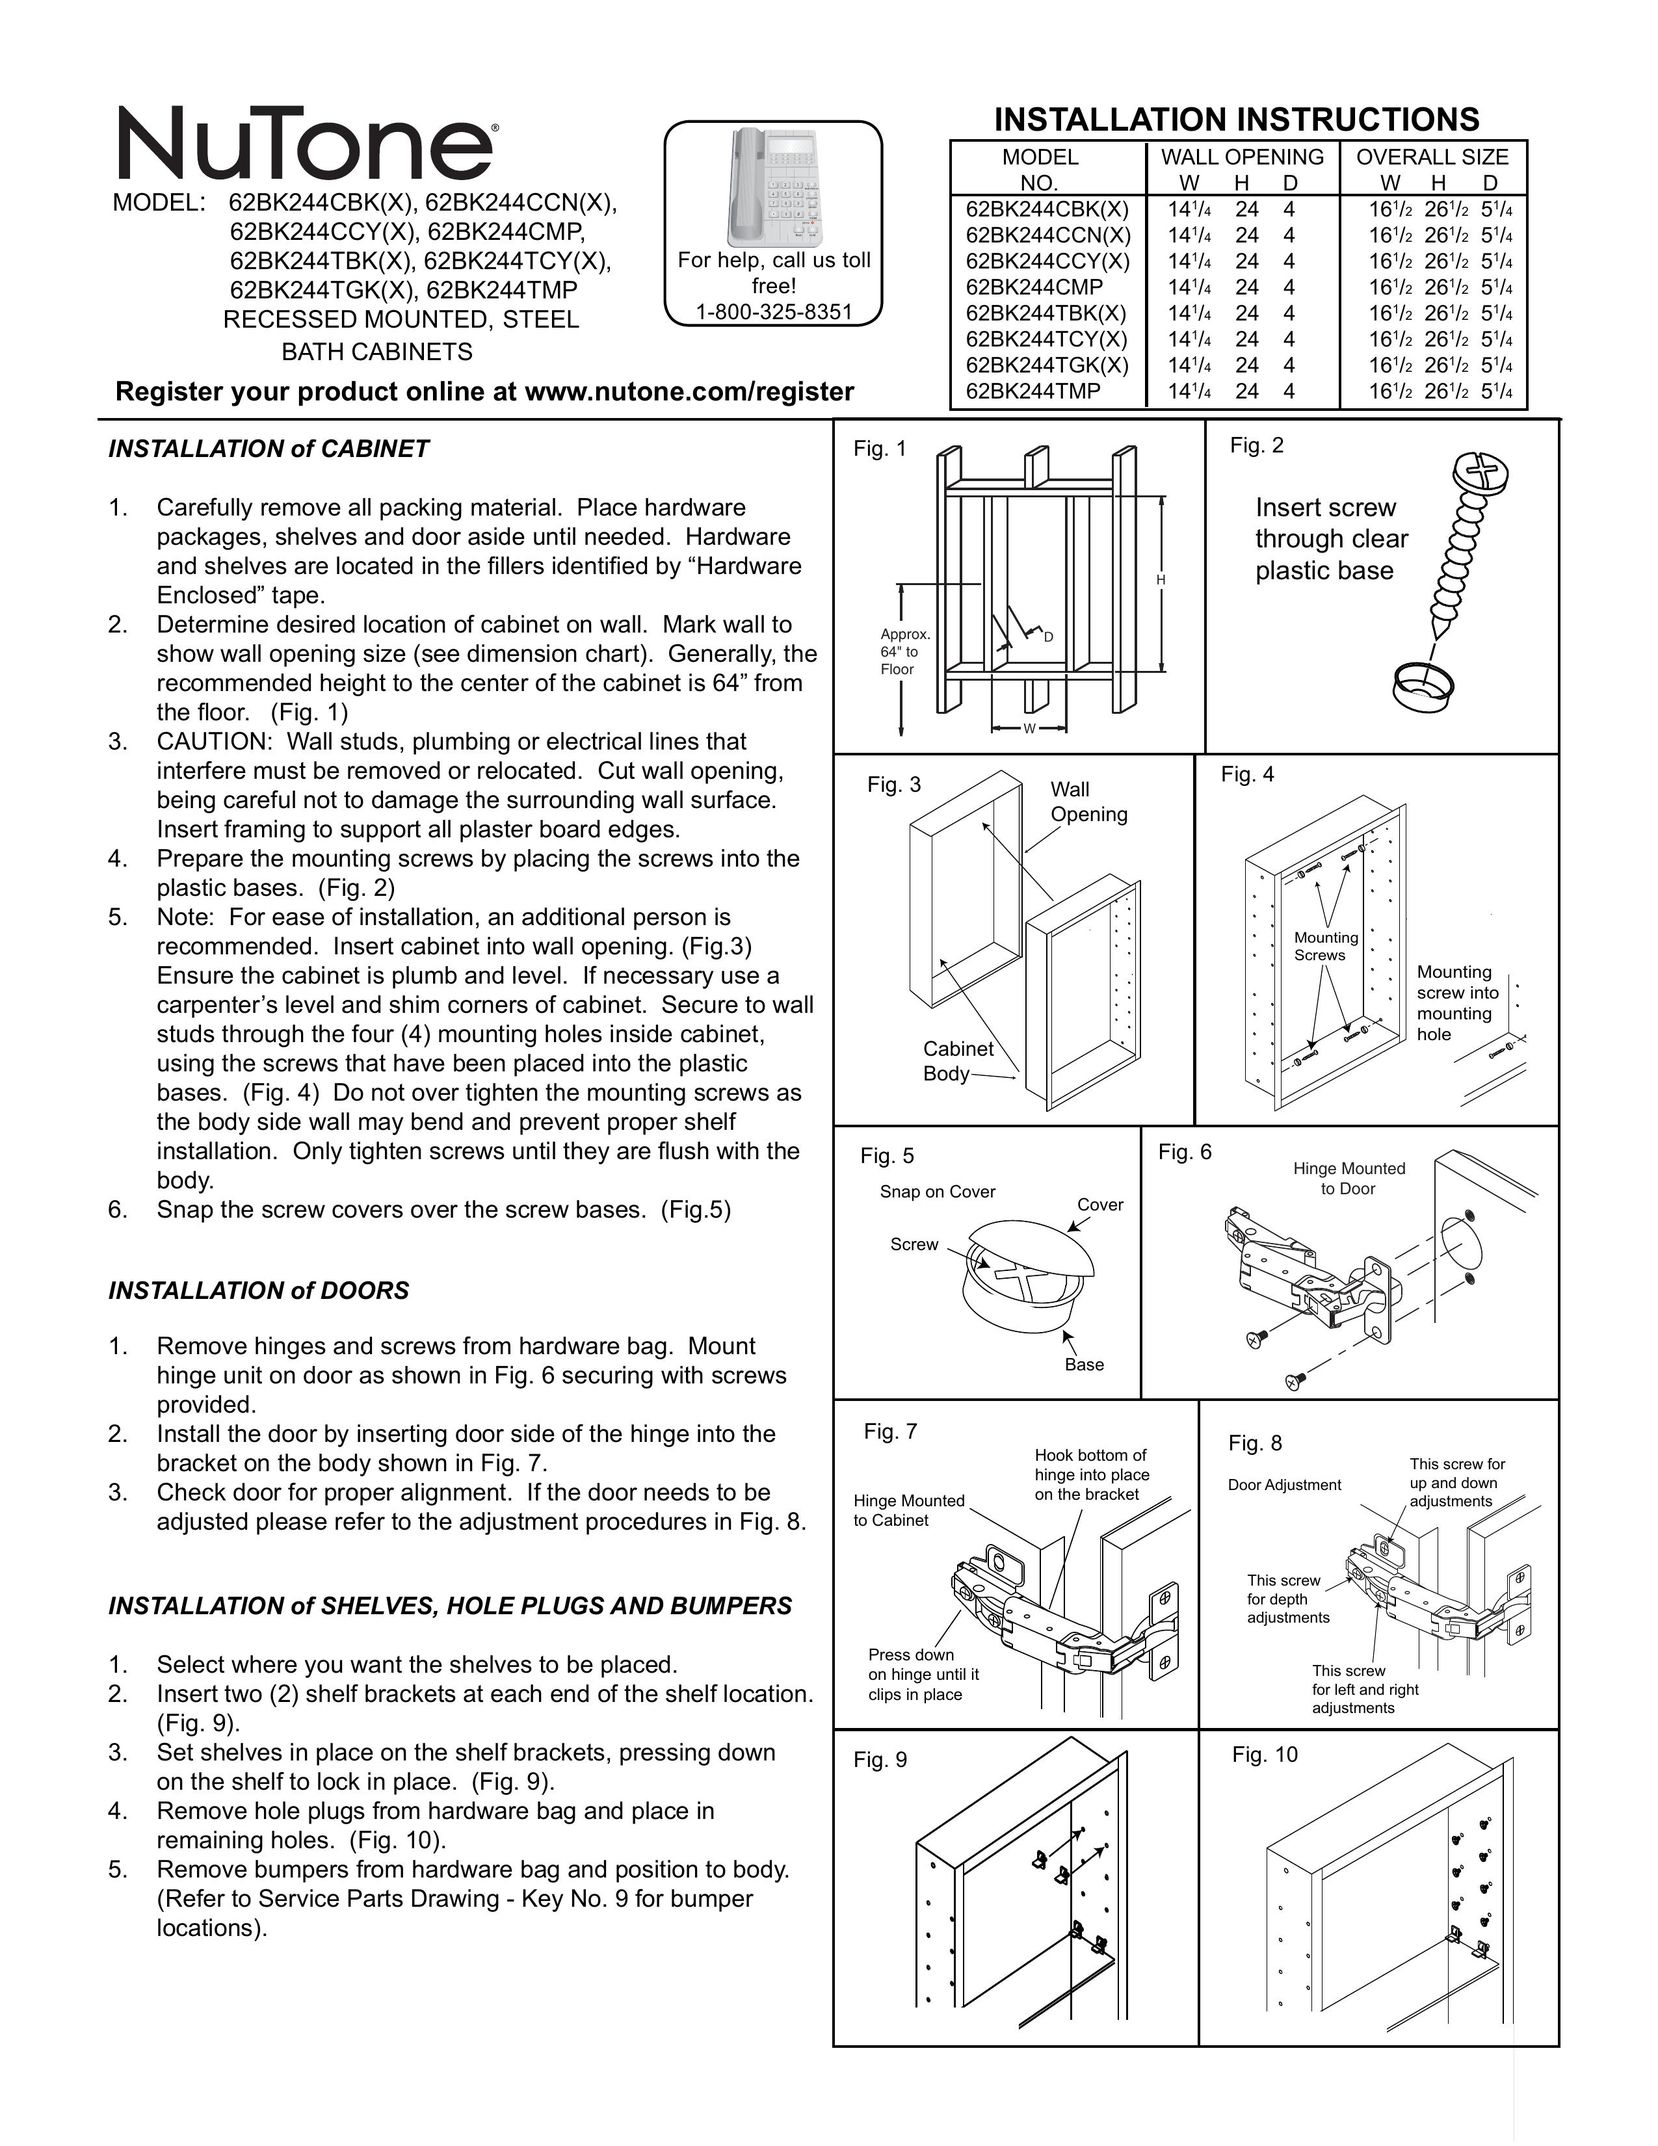 NuTone 62BK244CMP Indoor Furnishings User Manual